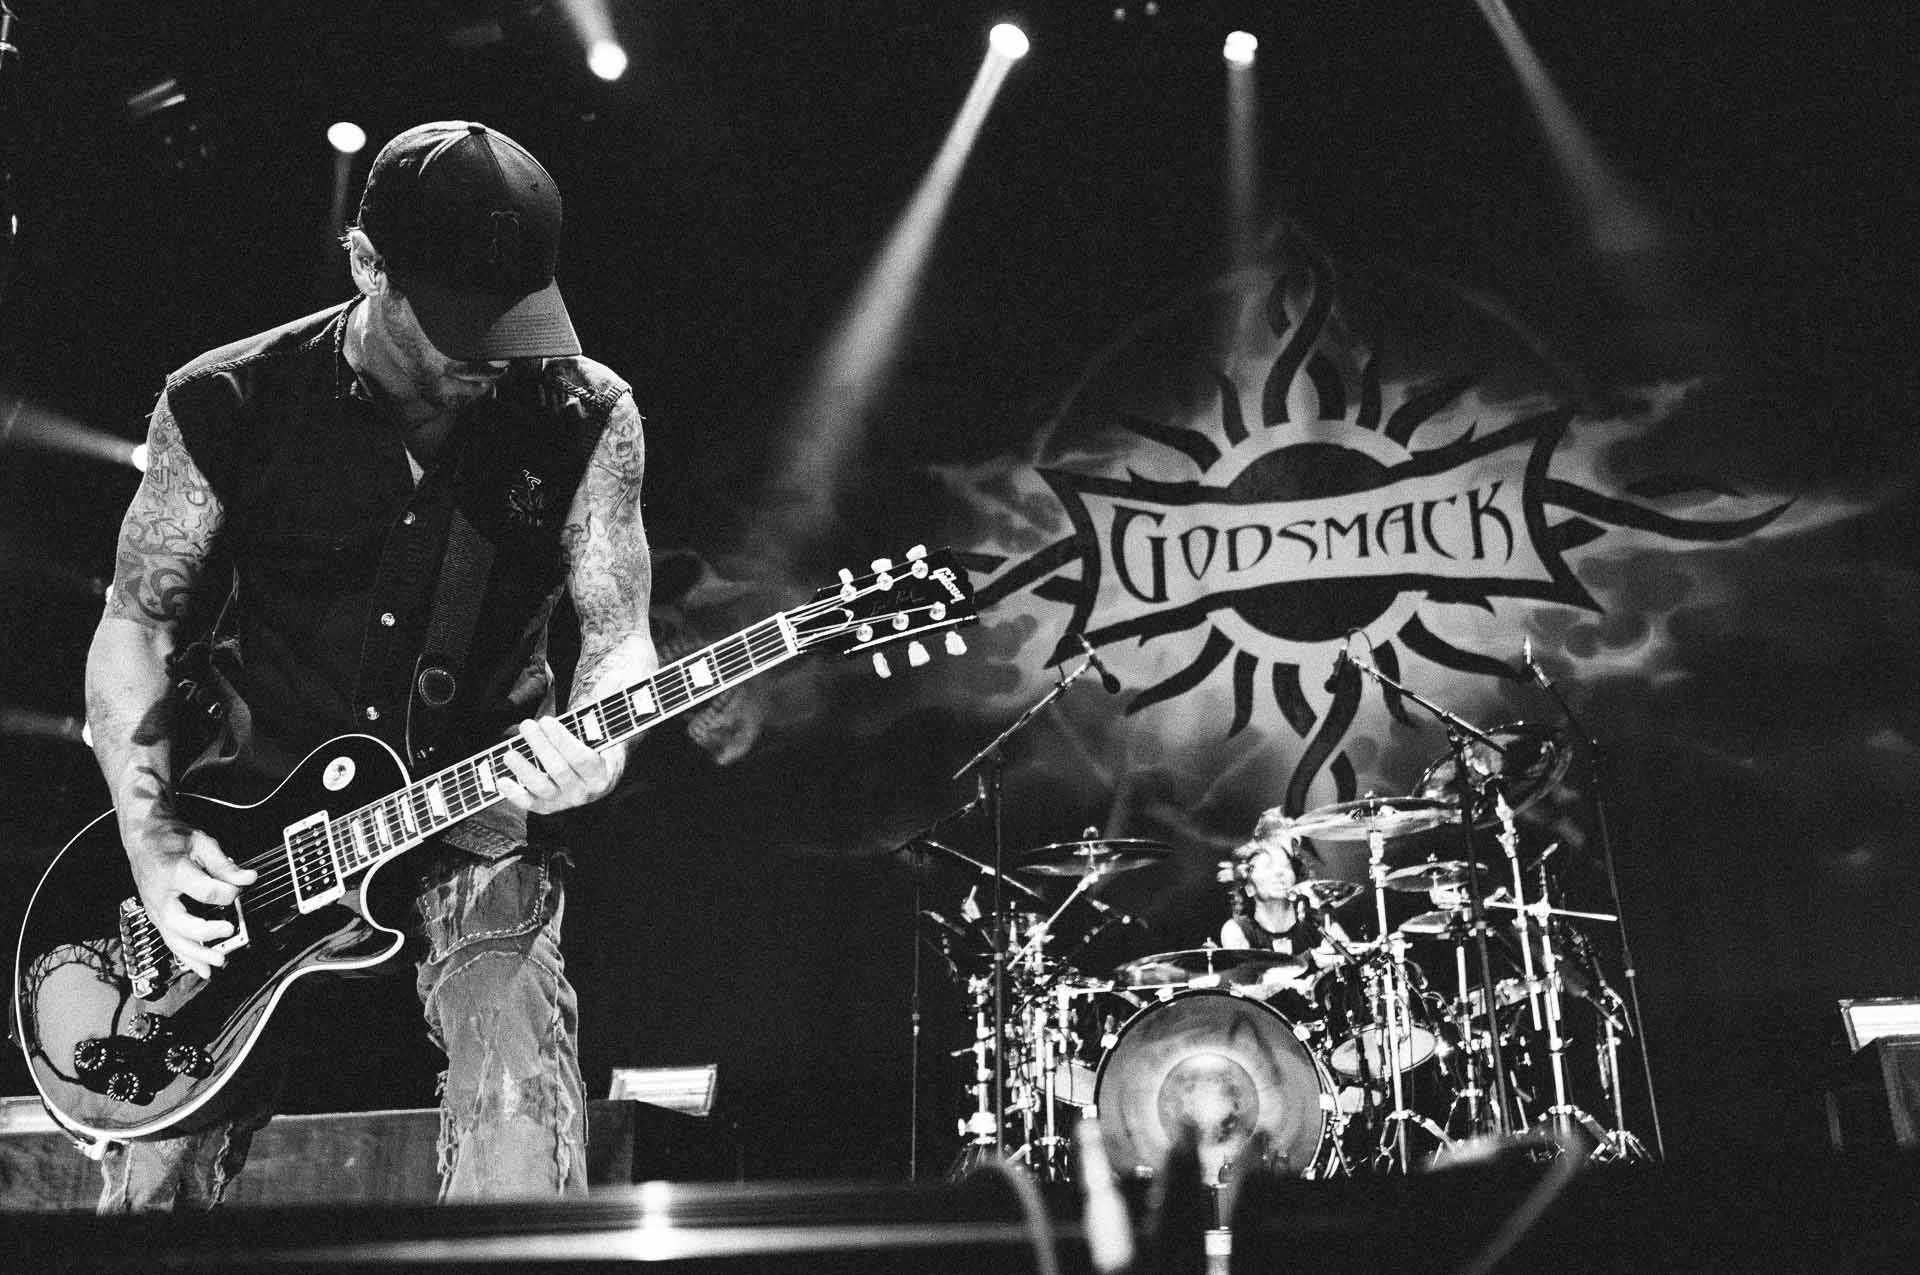 Godsmack Alternative Metal Nu Metal Heavy Hard Rock 1gods Guitar Concert Wallpaper 1920x1275 664715 Wallpaperup 1920x1275